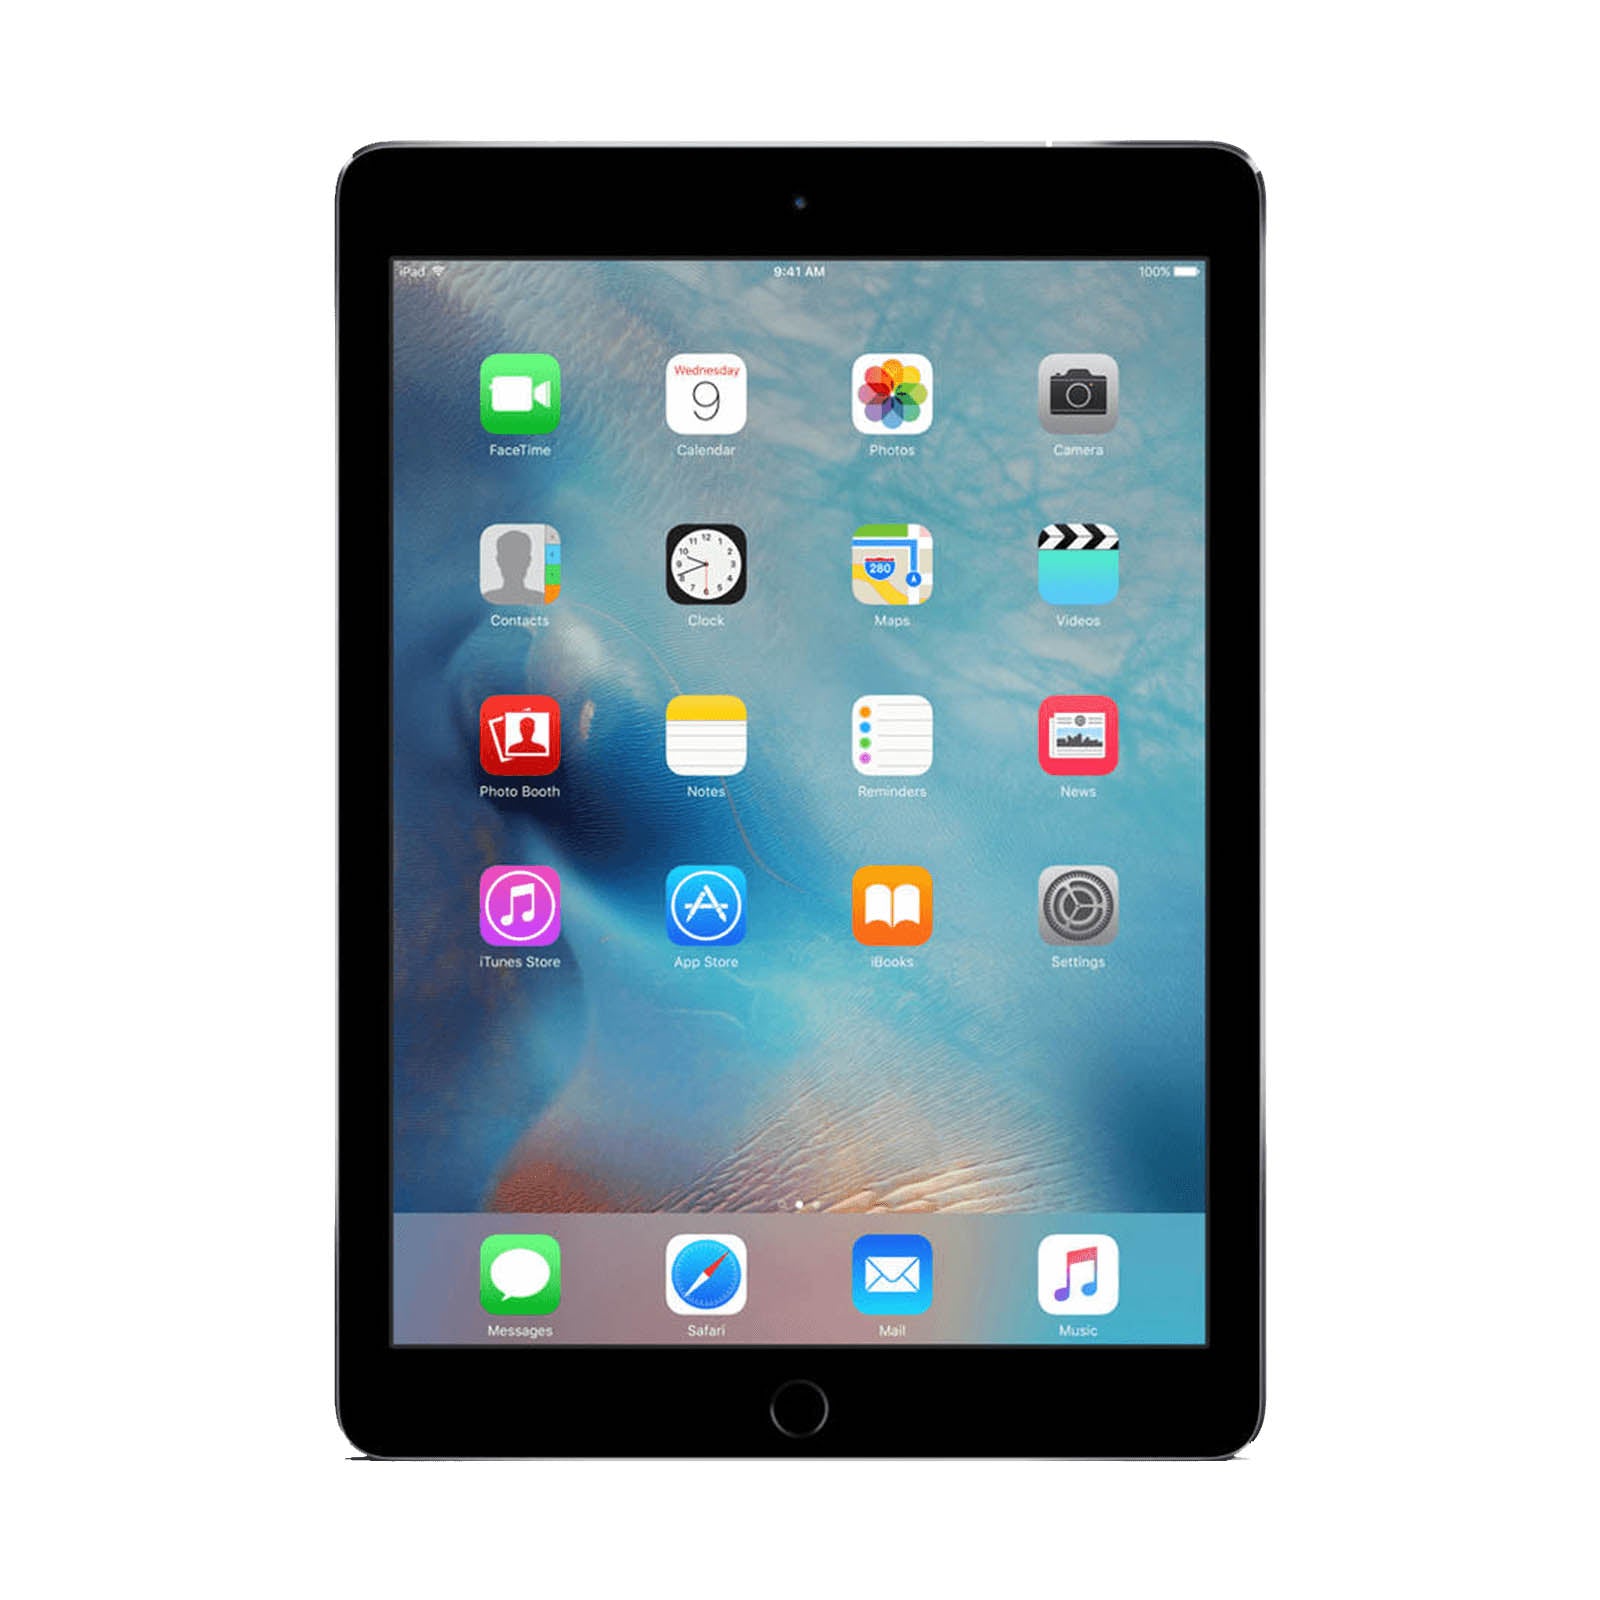 iPad Pro 9.7 Inch 32GB Space Grey Pristine - WiFi